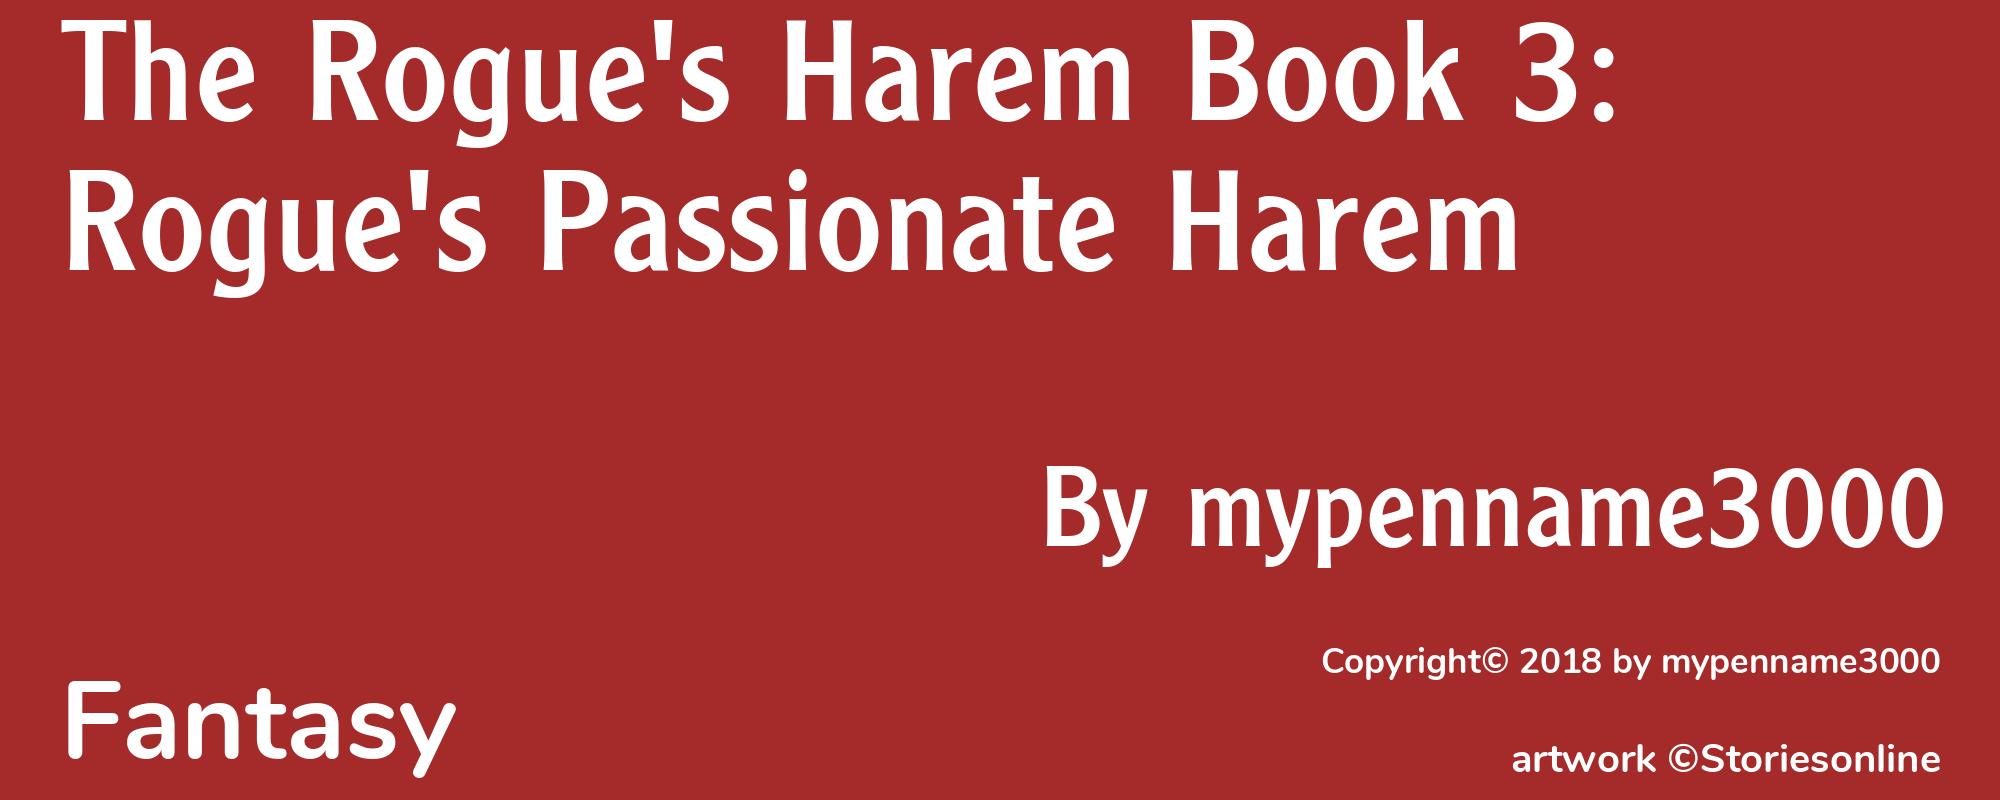 The Rogue's Harem Book 3: Rogue's Passionate Harem - Cover